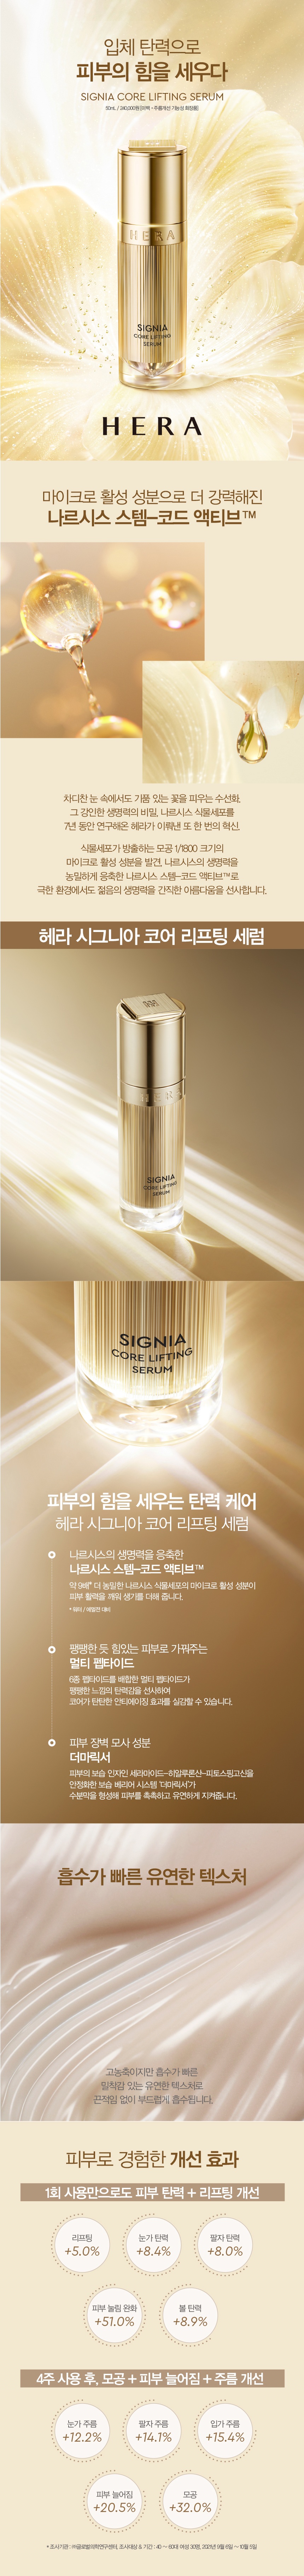 Hera Signia Core Lifting Serum korean skincare product onine shop malaysia China india1